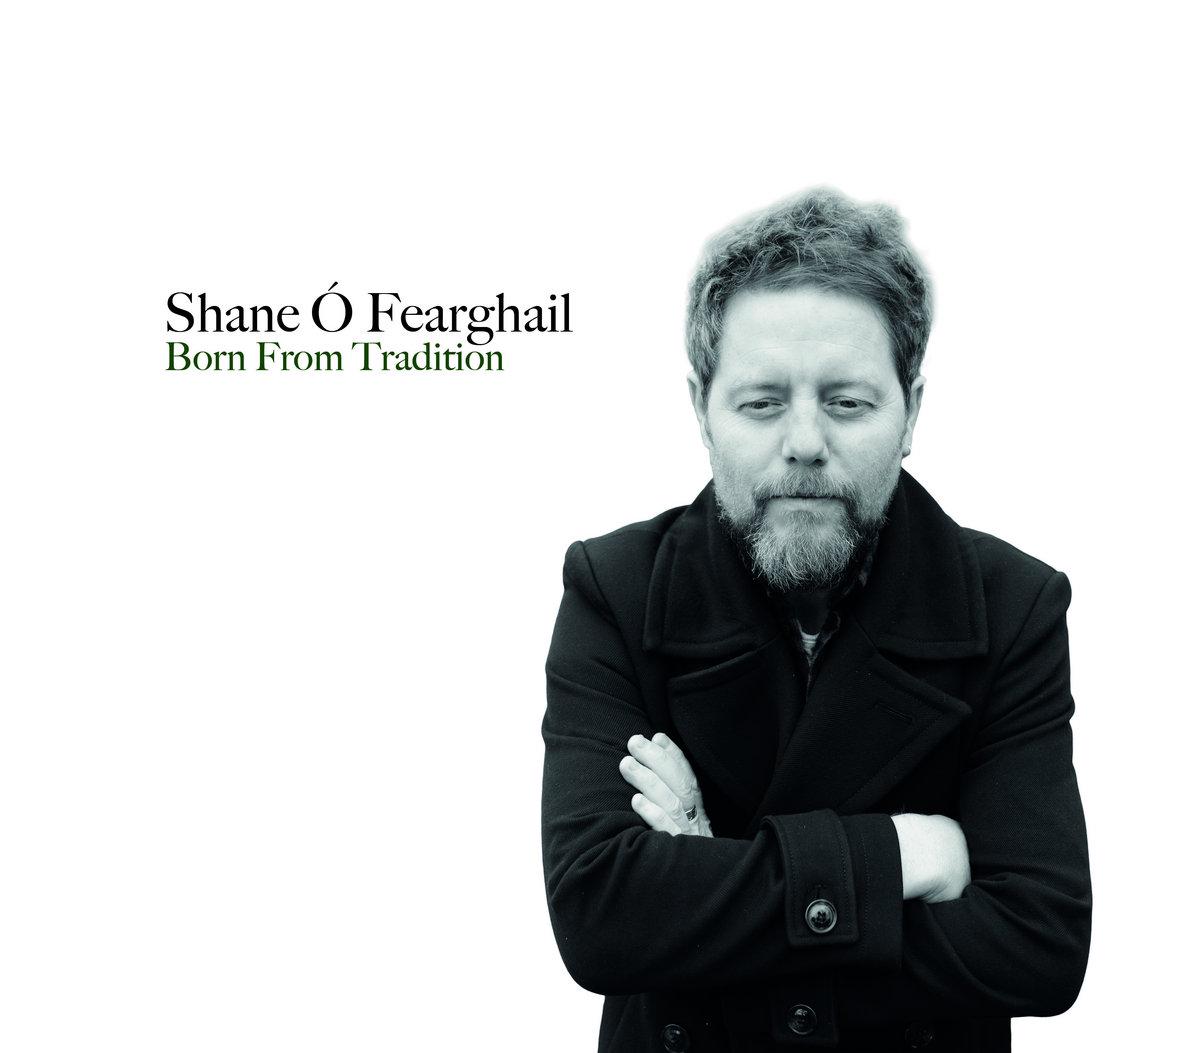 Shane Ó Fearghail